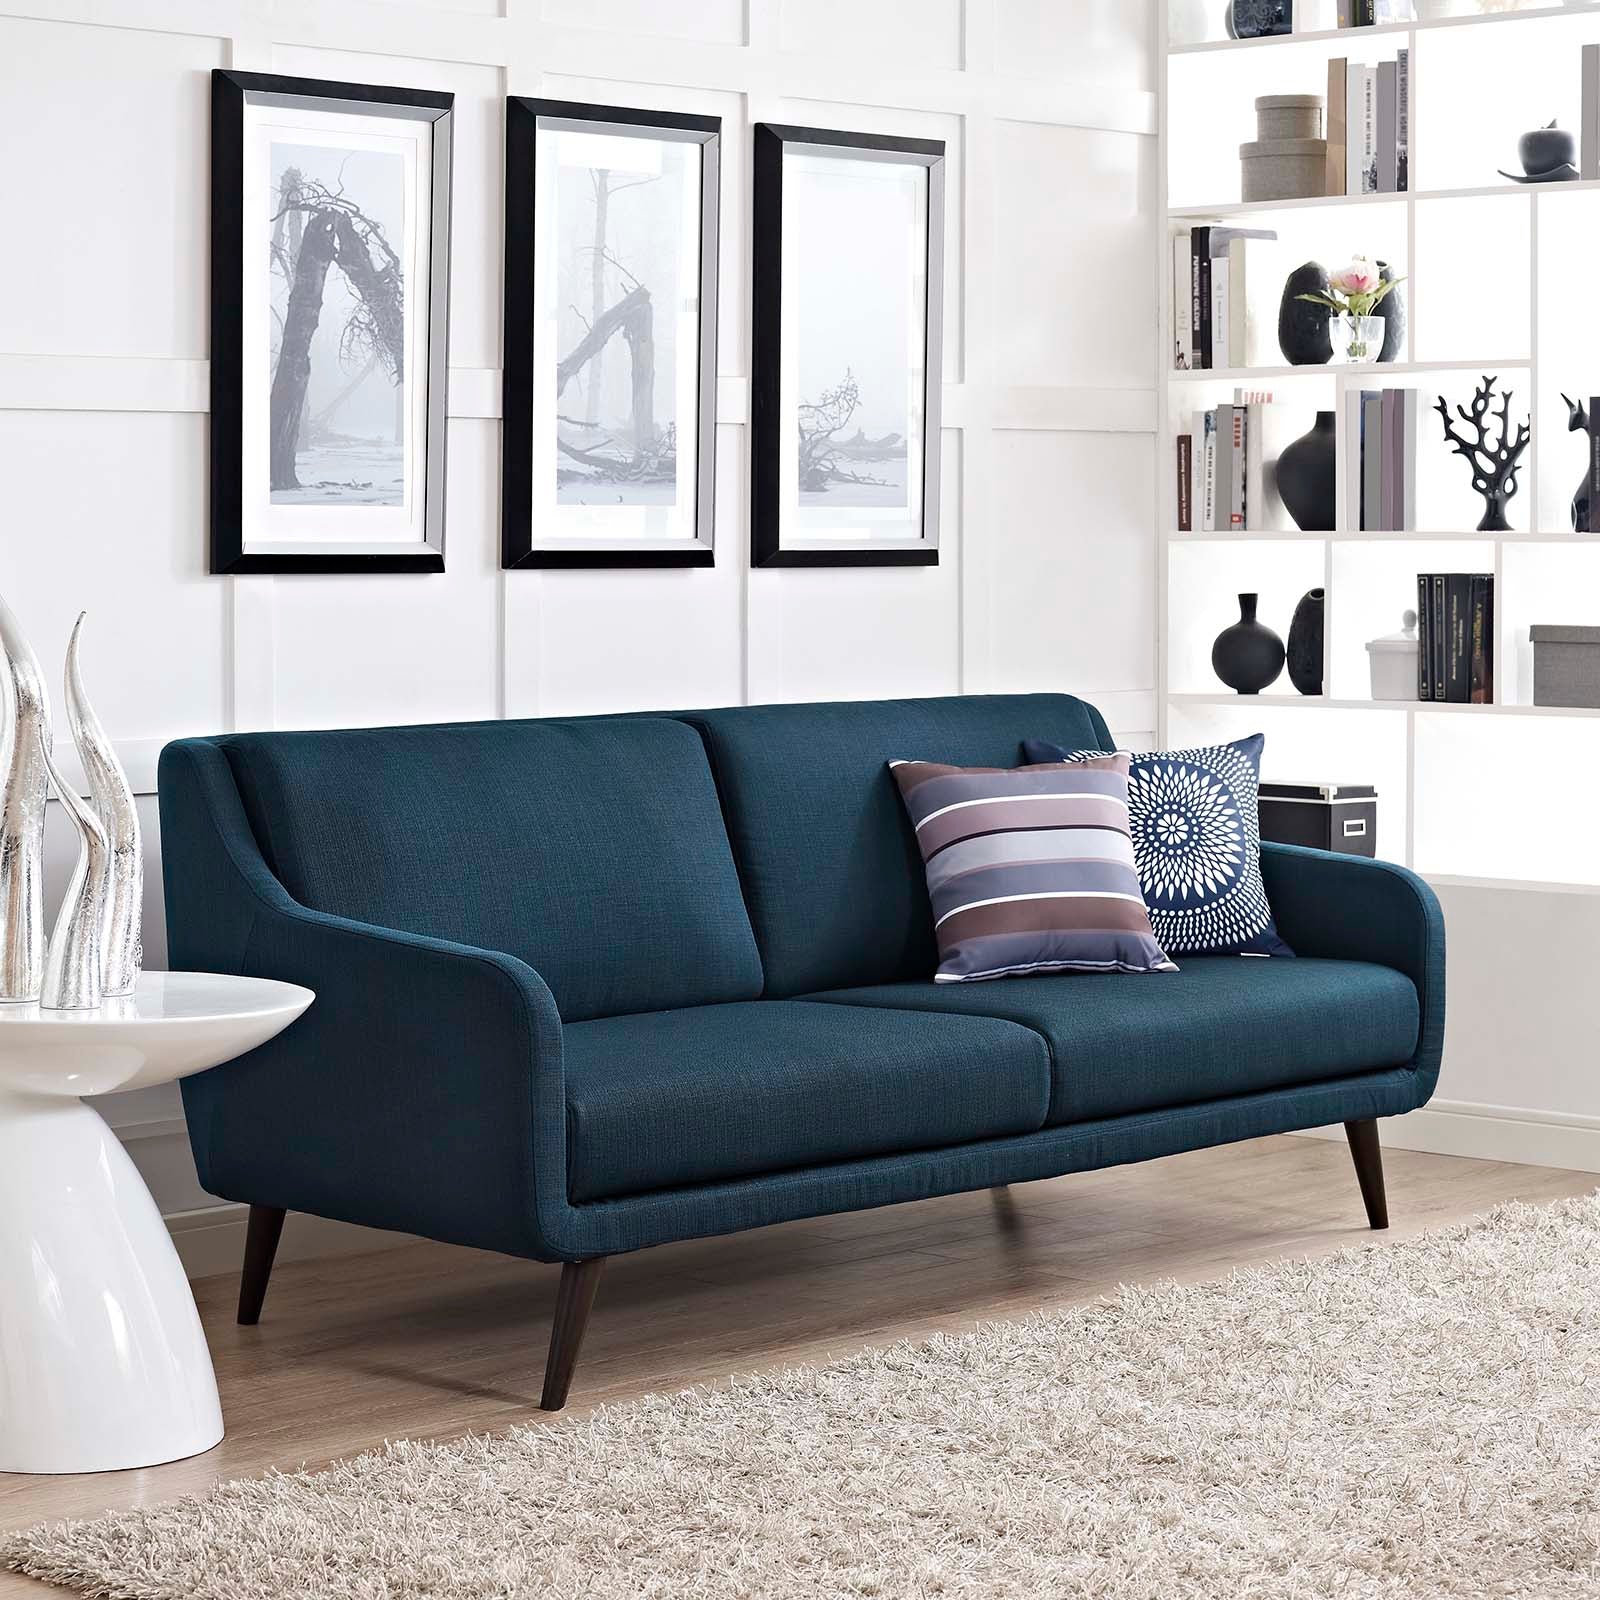 Verve Upholstered Fabric Sofa - East Shore Modern Home Furnishings